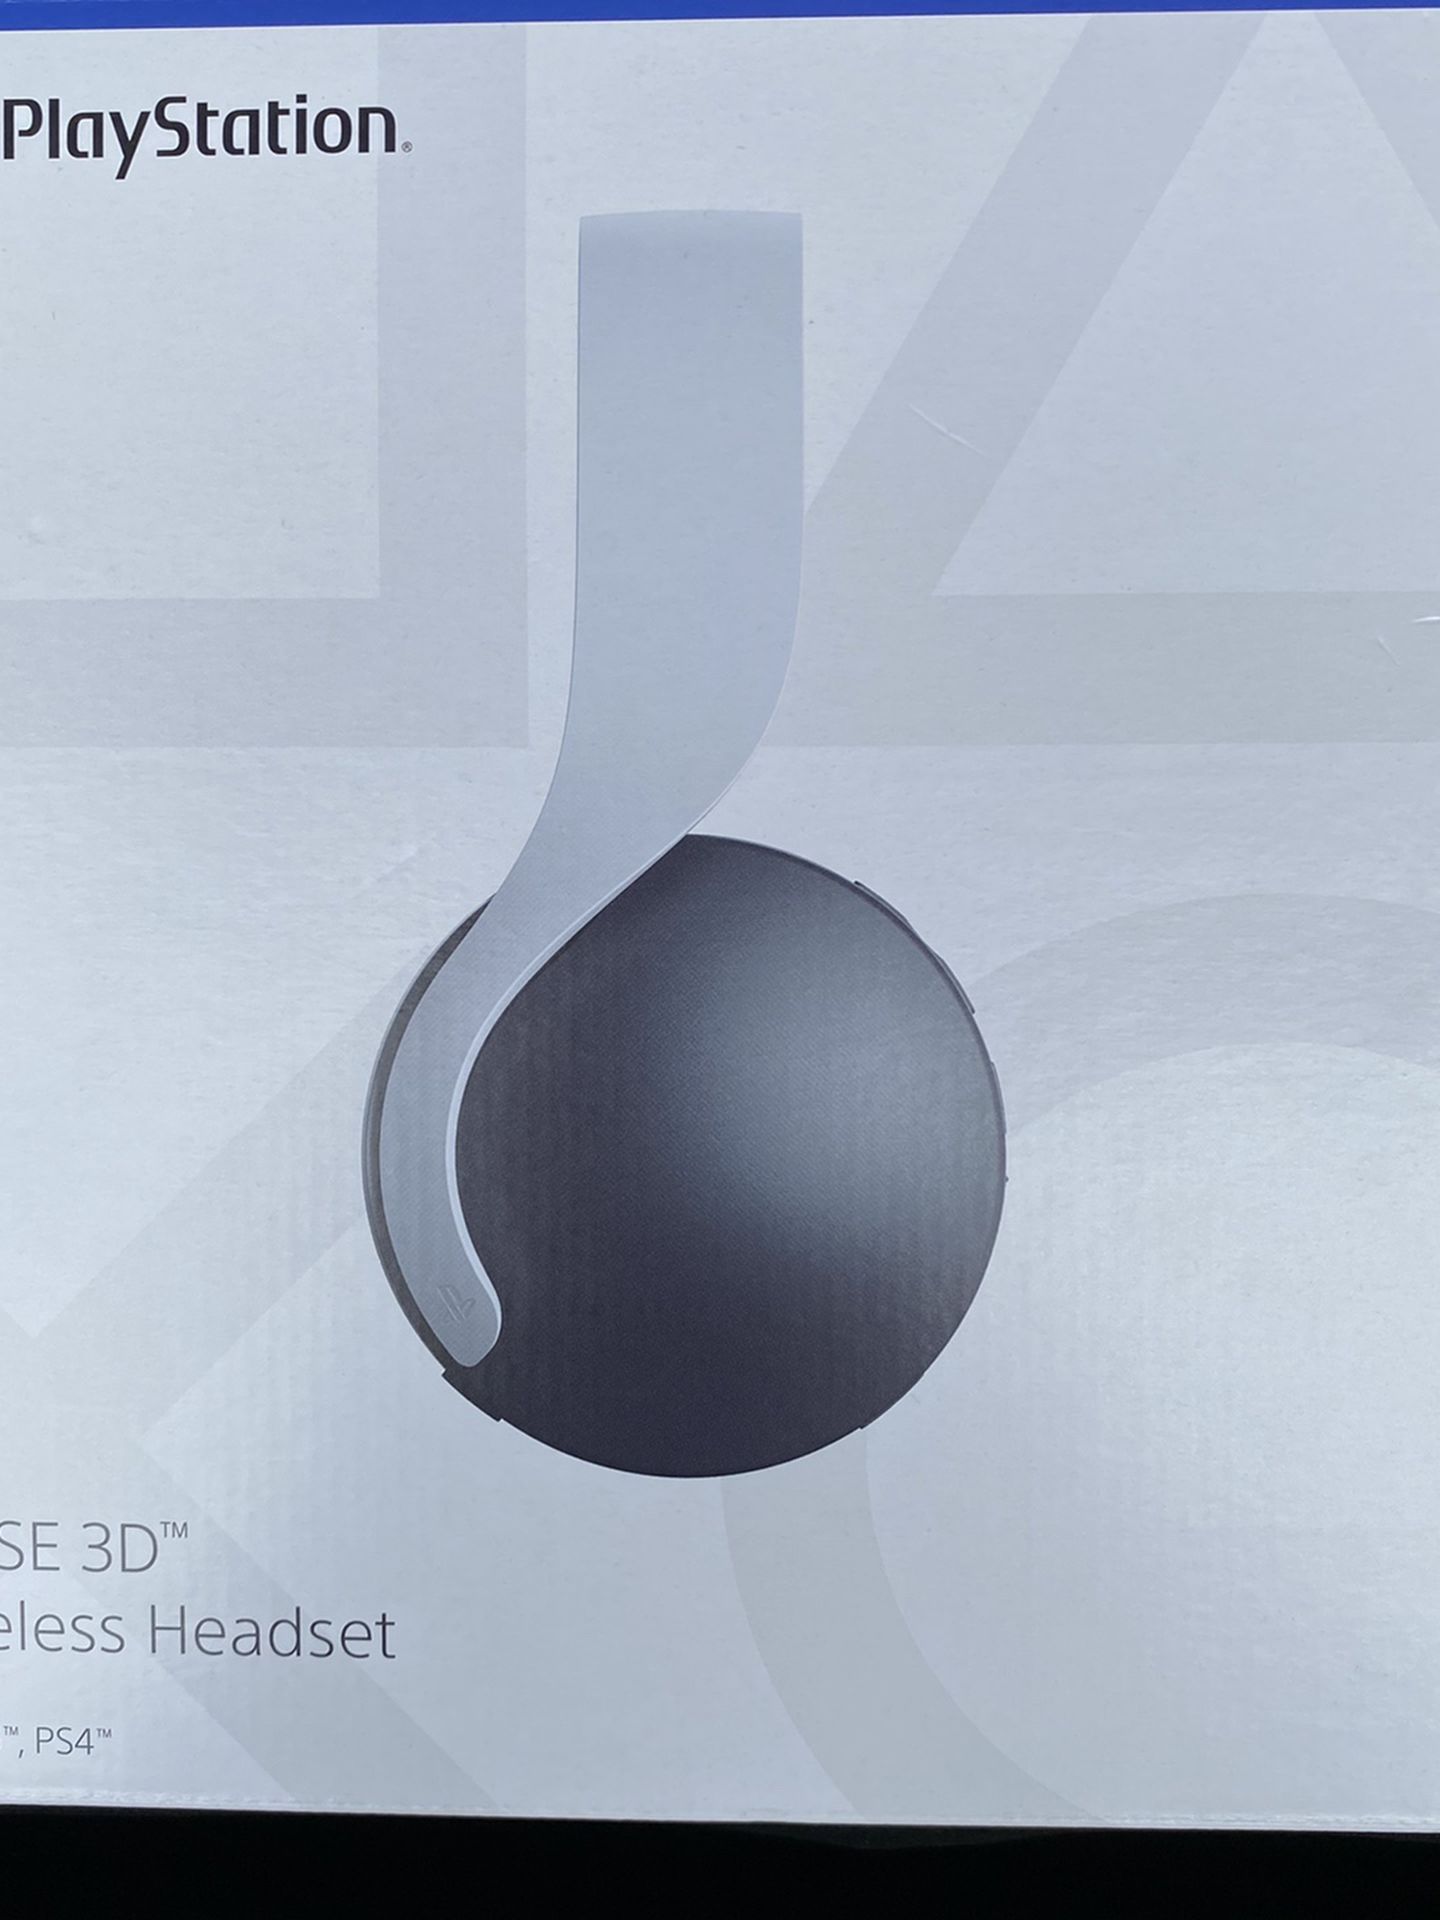 Sony Pulse 3D Wireless Headset PS5/PS4